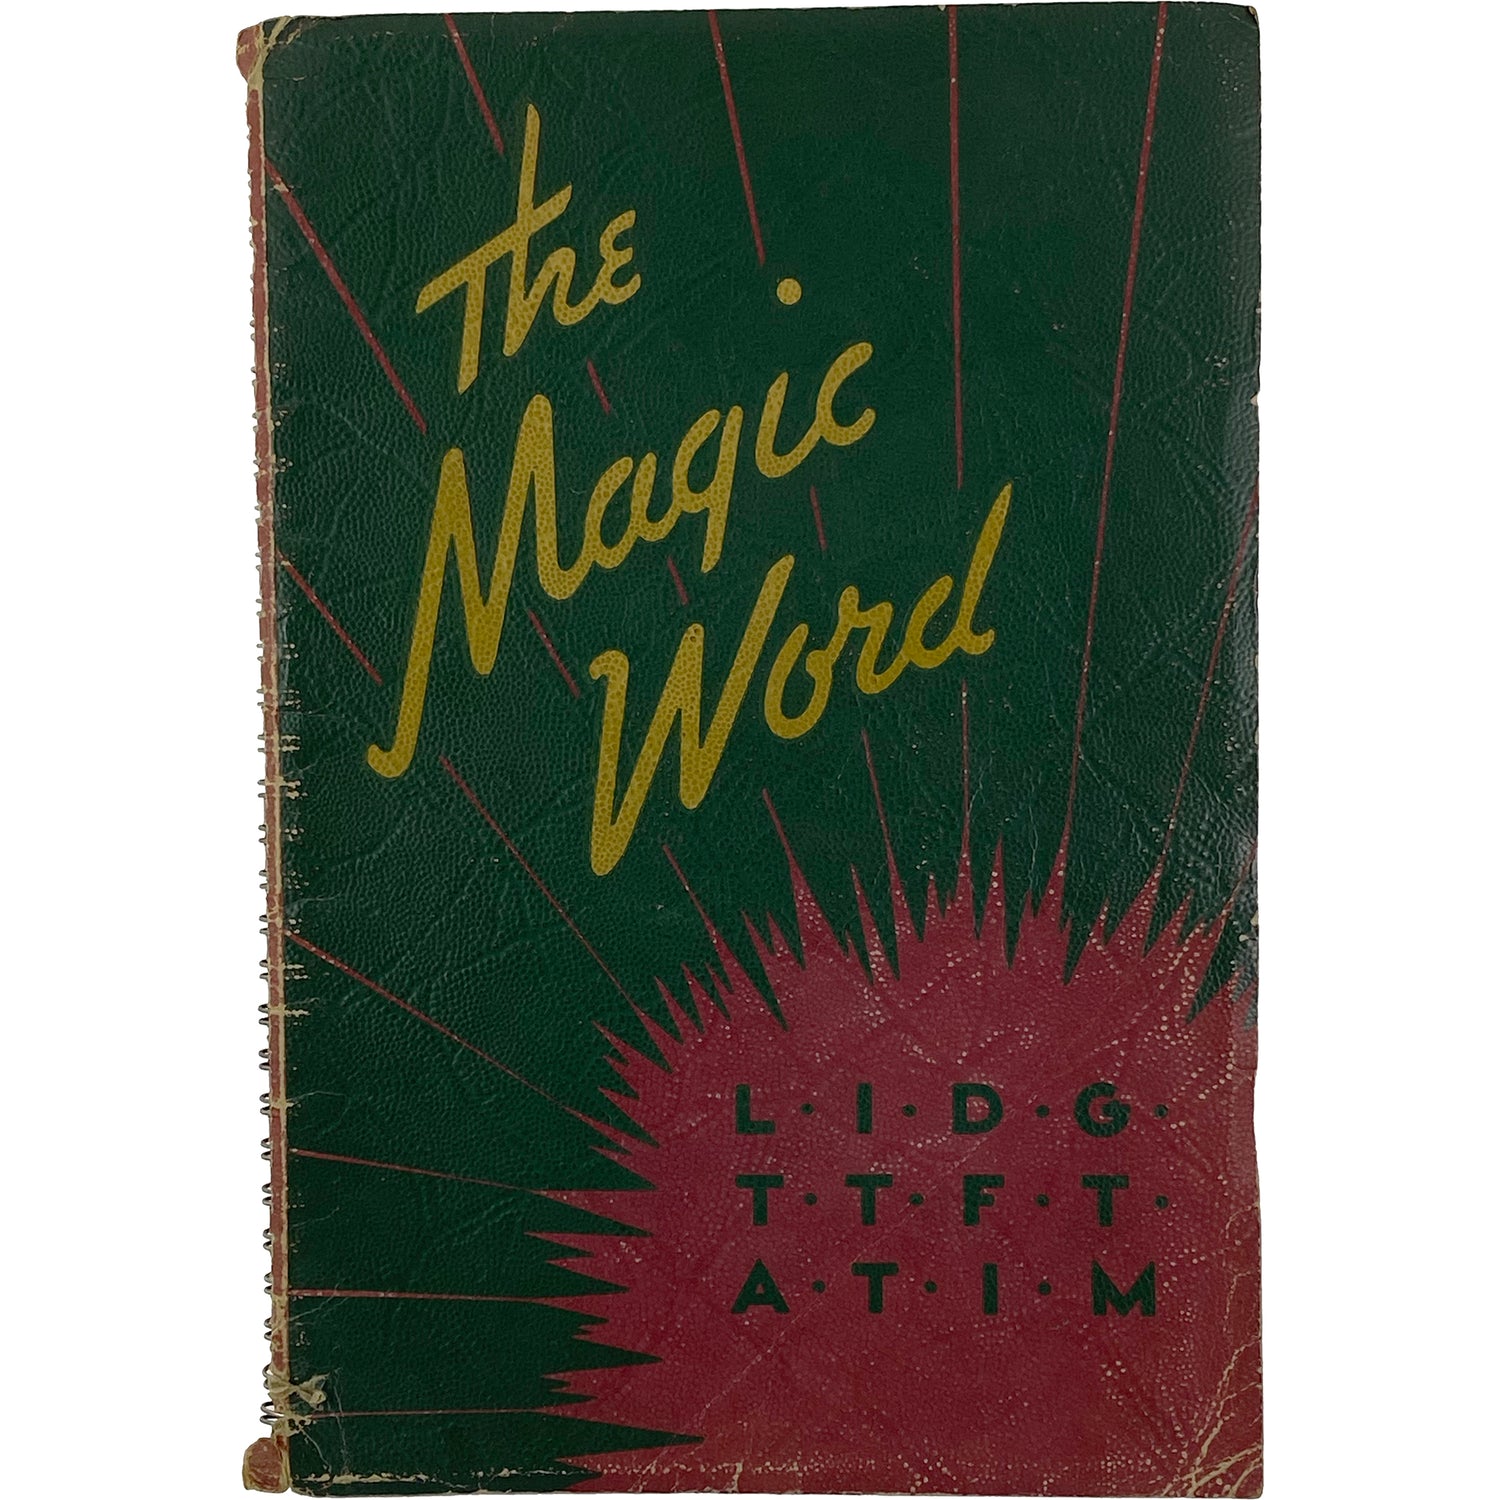 THE MAGIC WORD BOOK